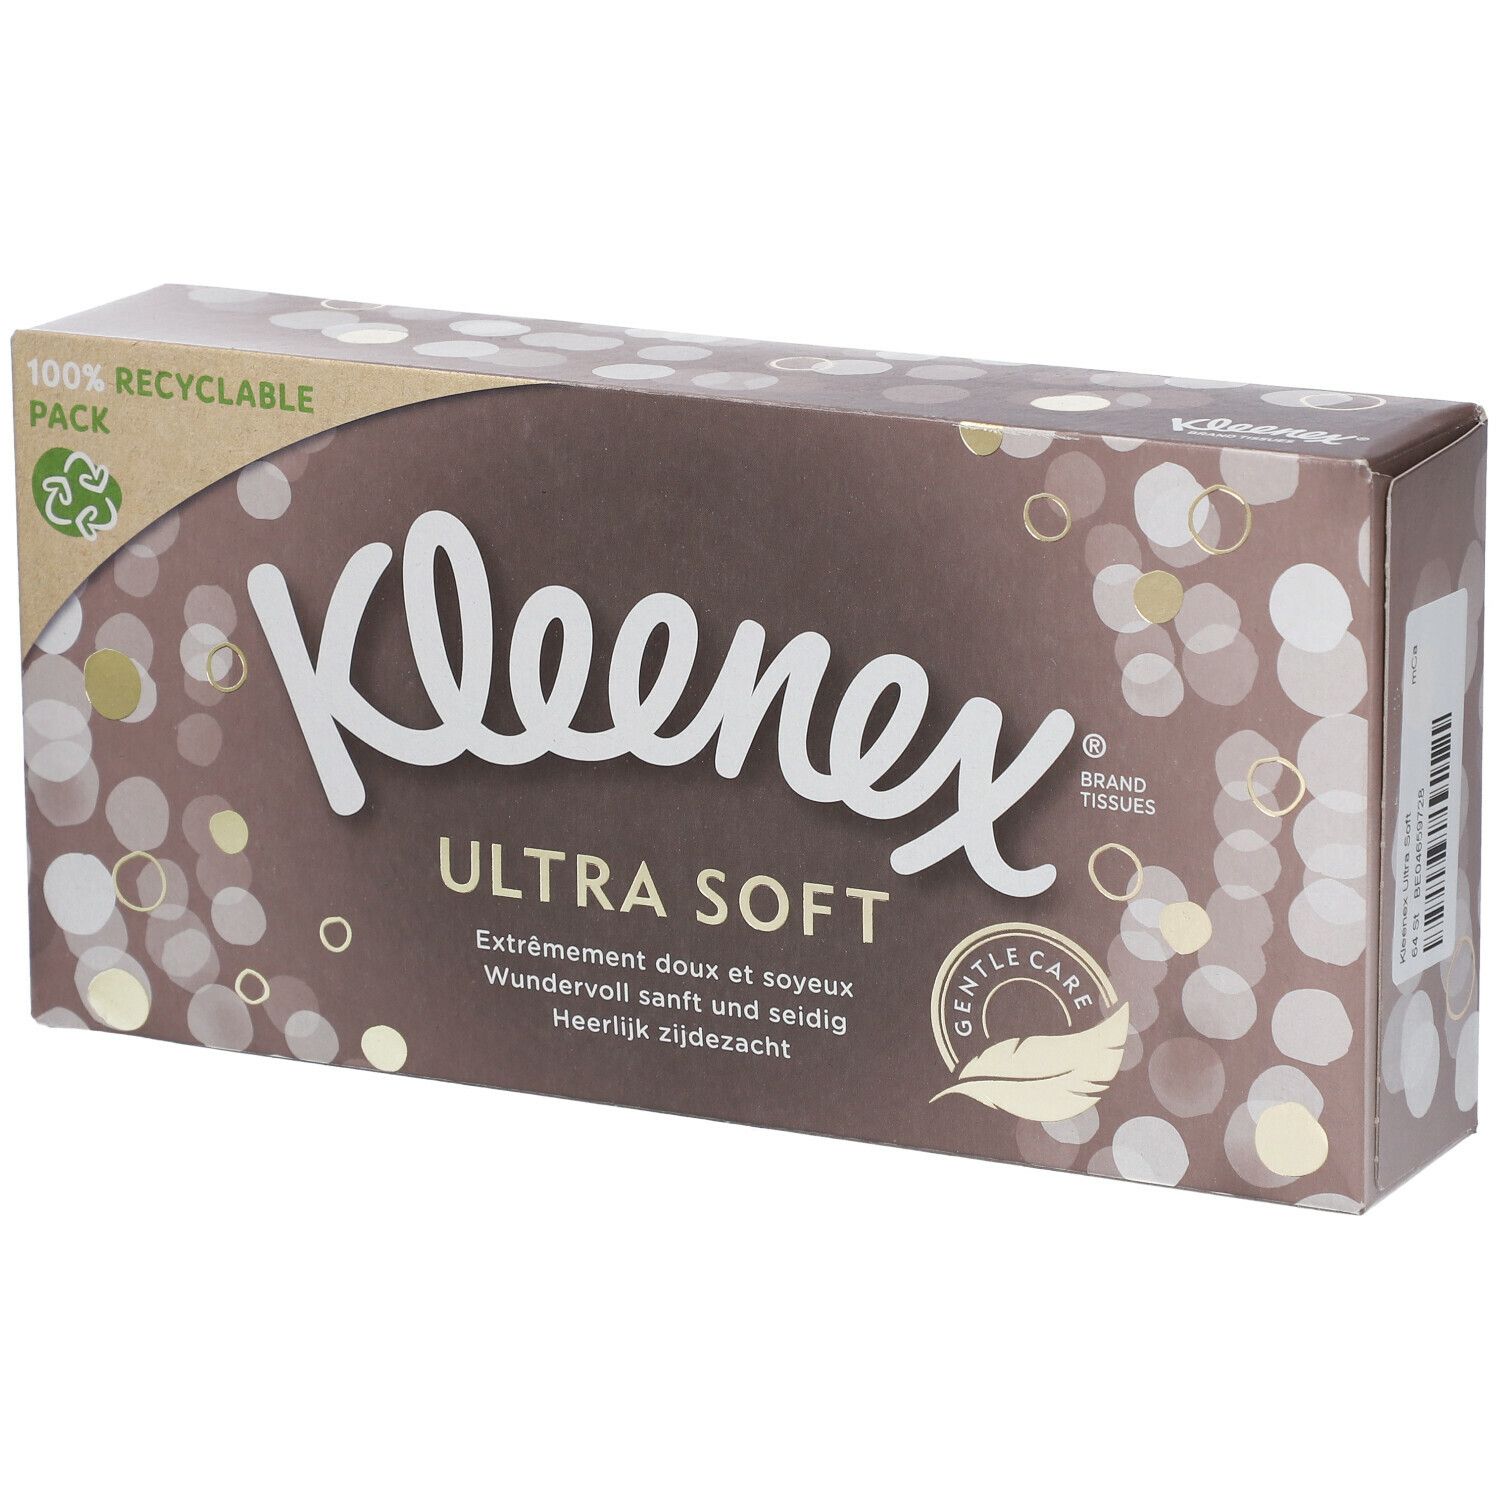 Kleenex Ultra soft